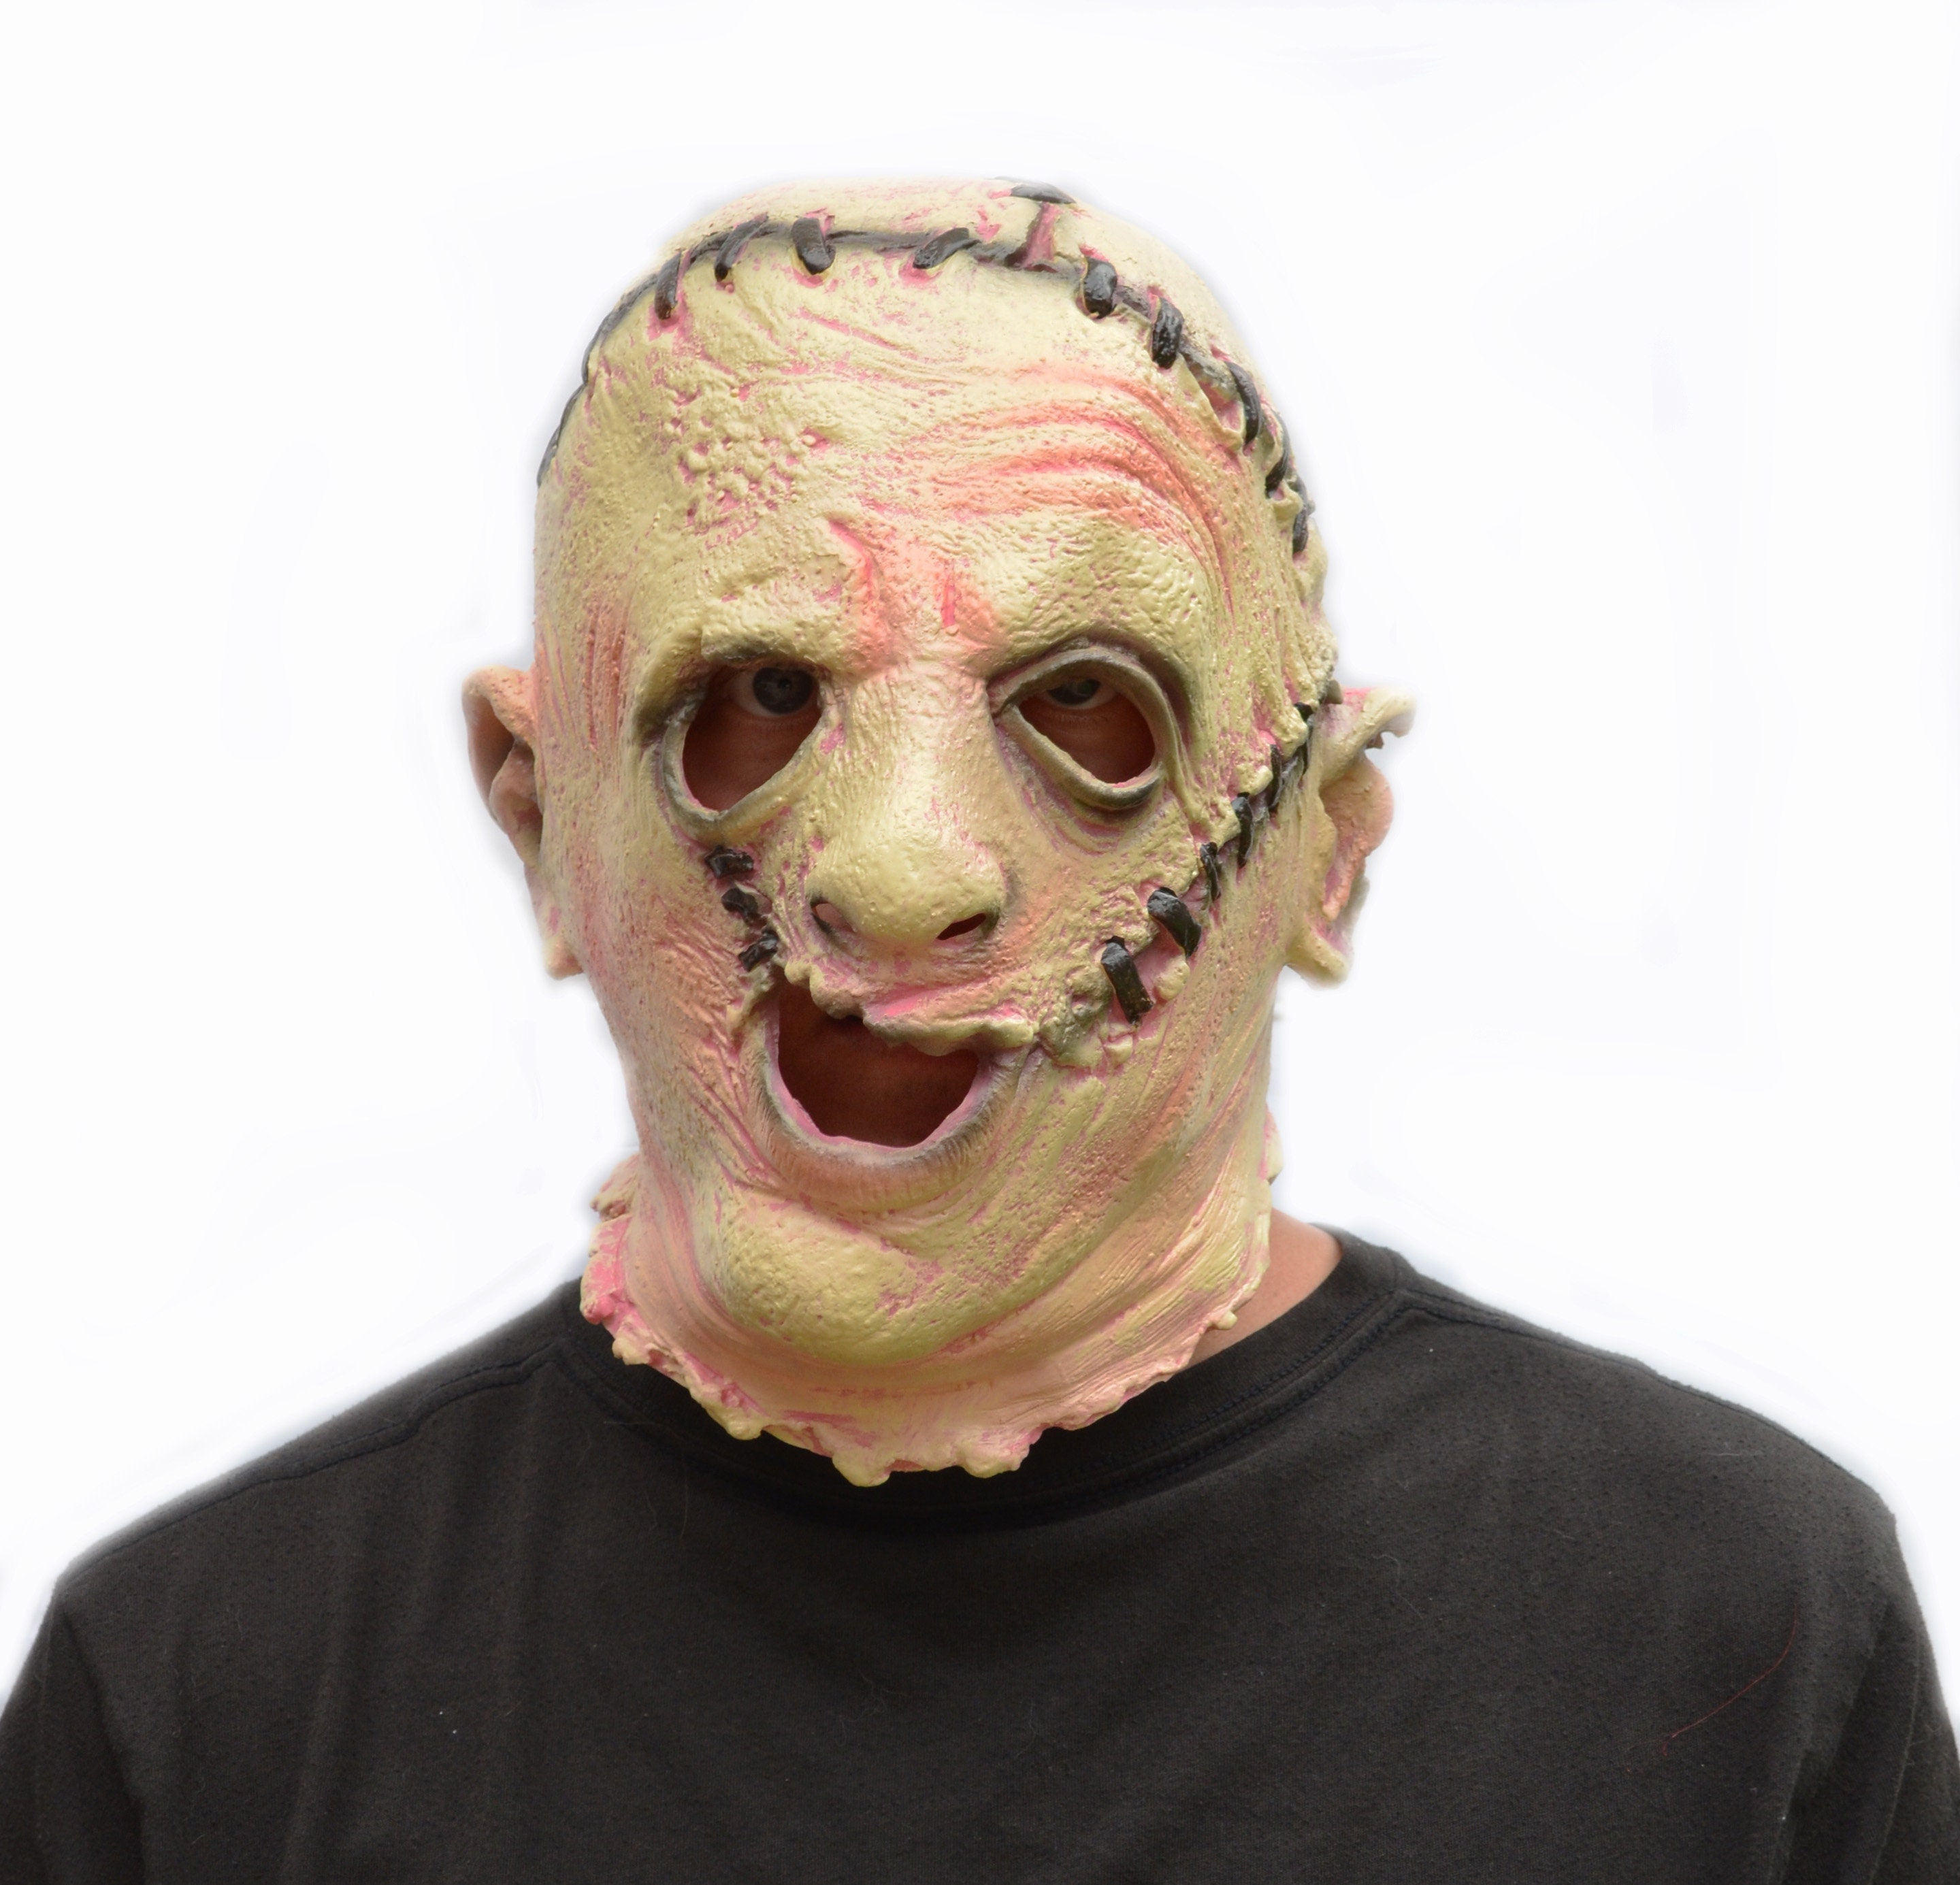  Dafatpig Chainsaw Man Mask Scary Full Head Latex